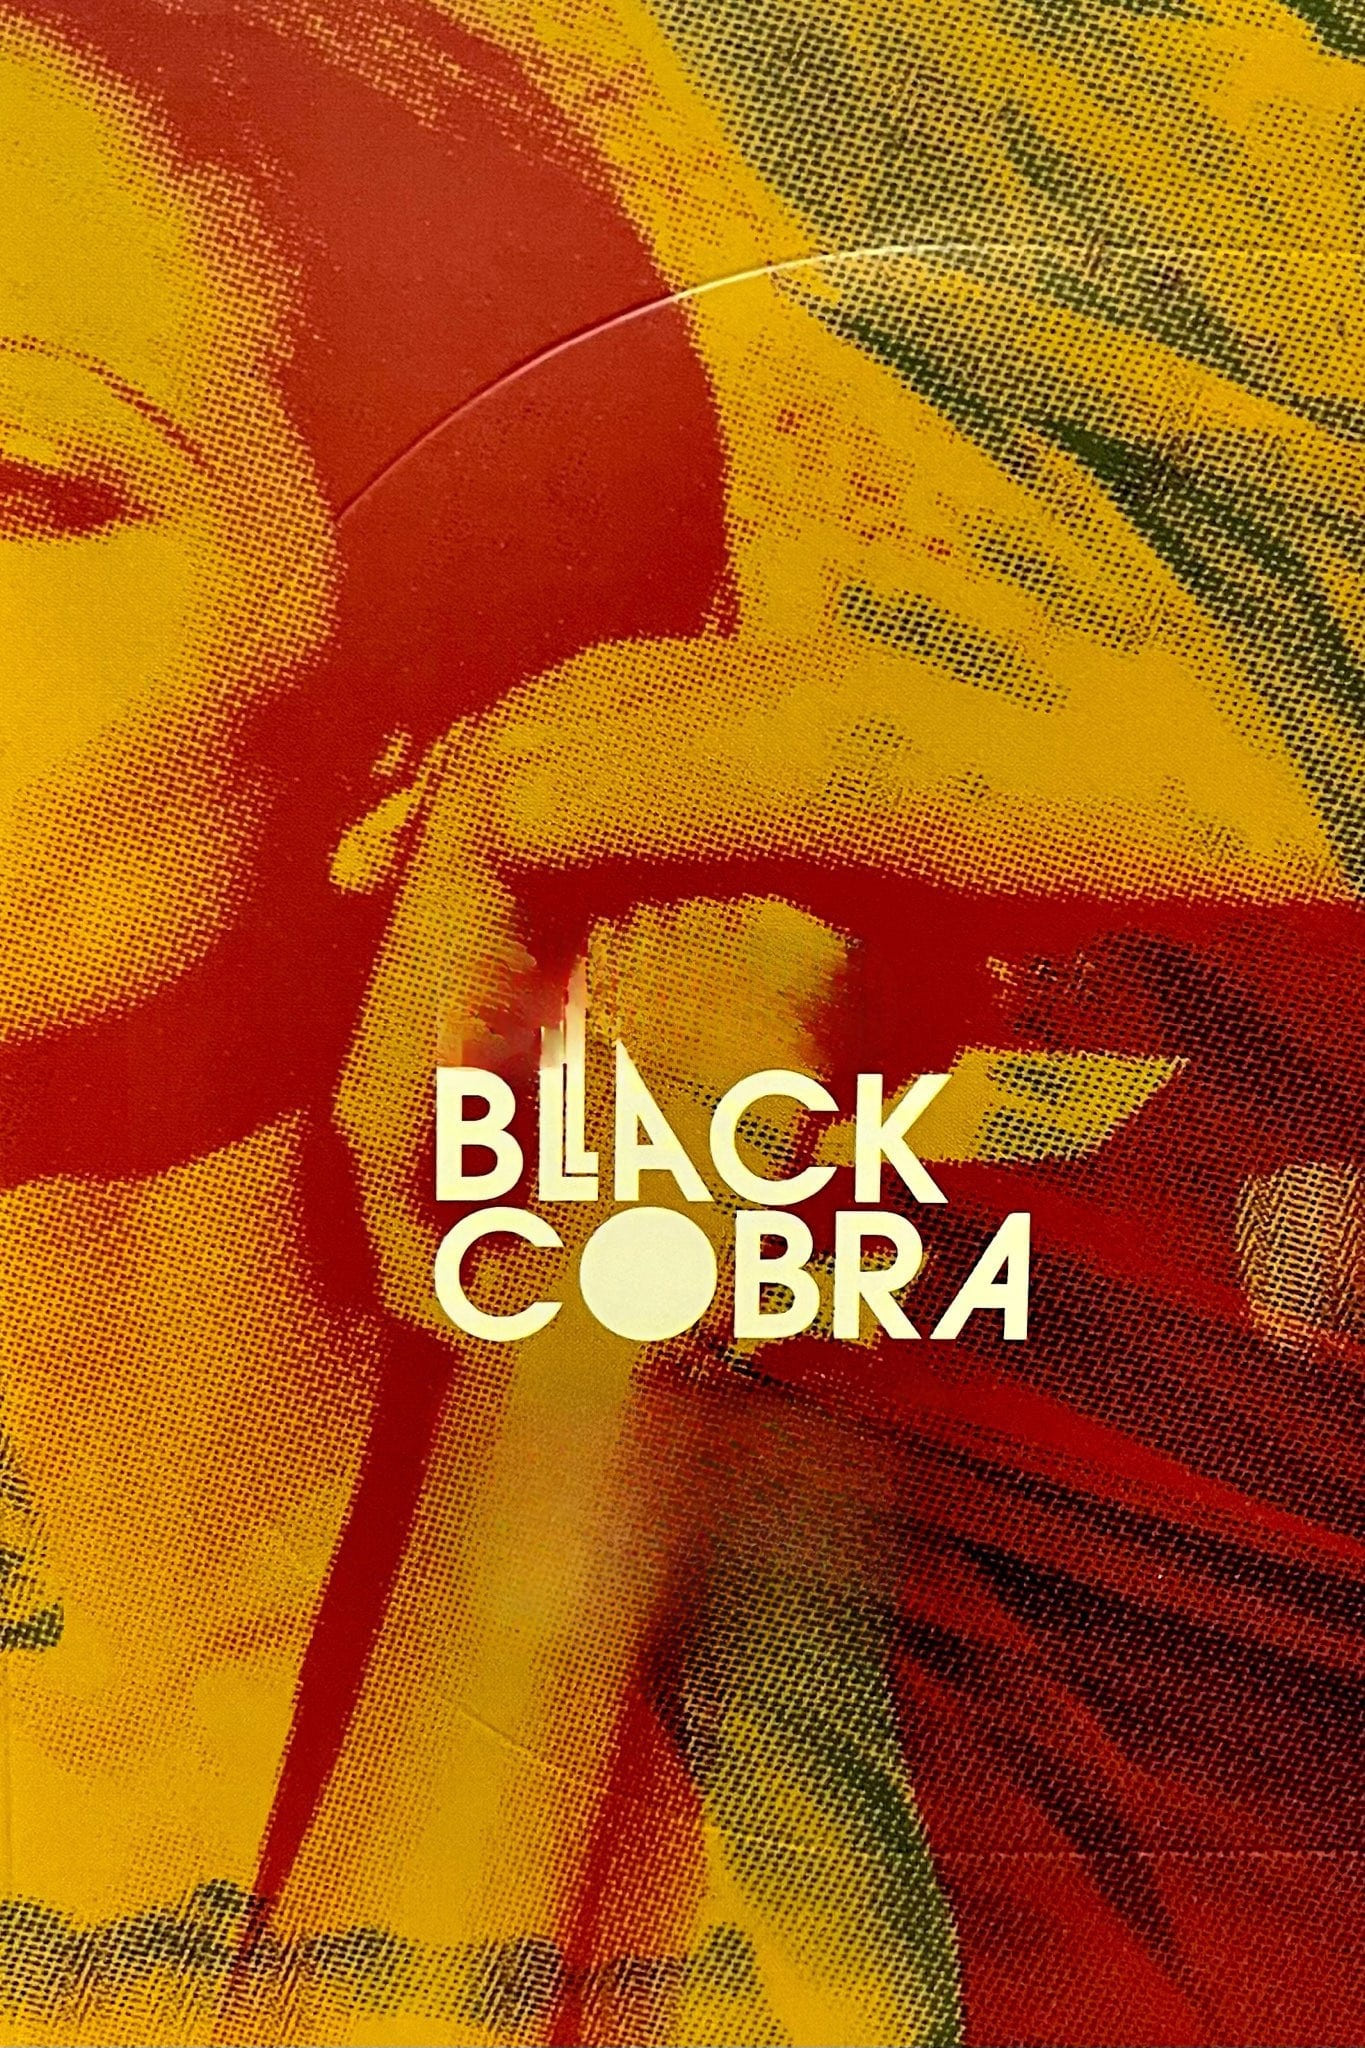 Black Cobra (1976)